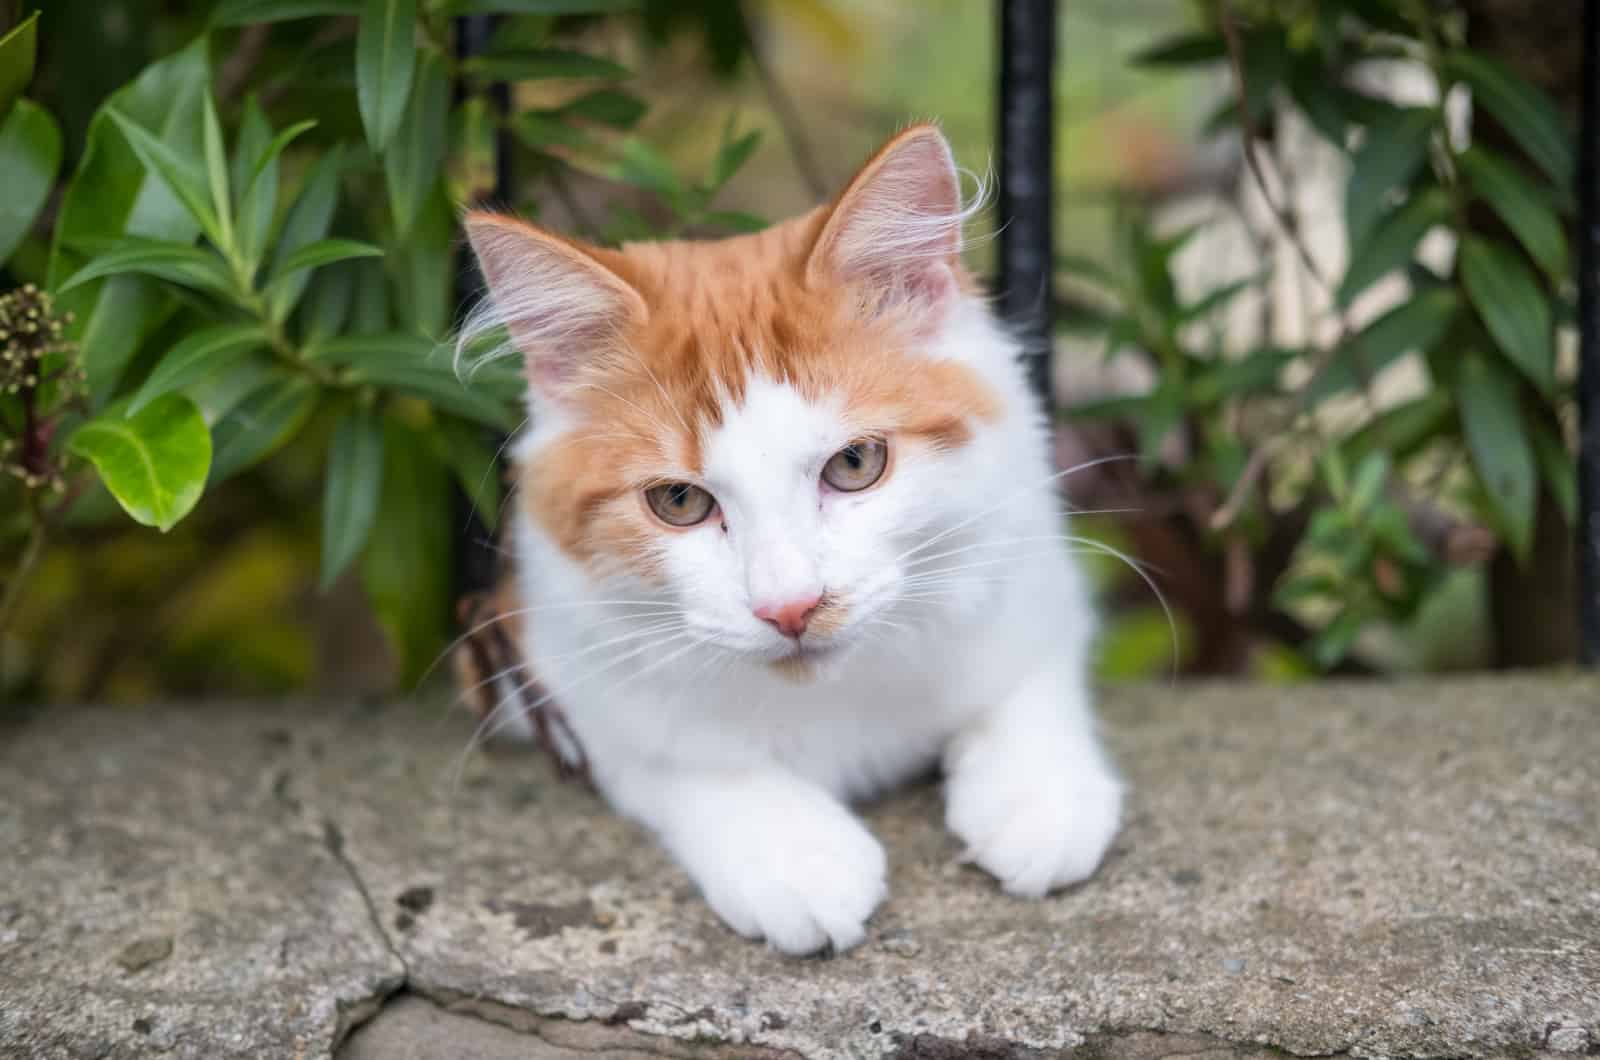 Orange and White Cat in the Grass